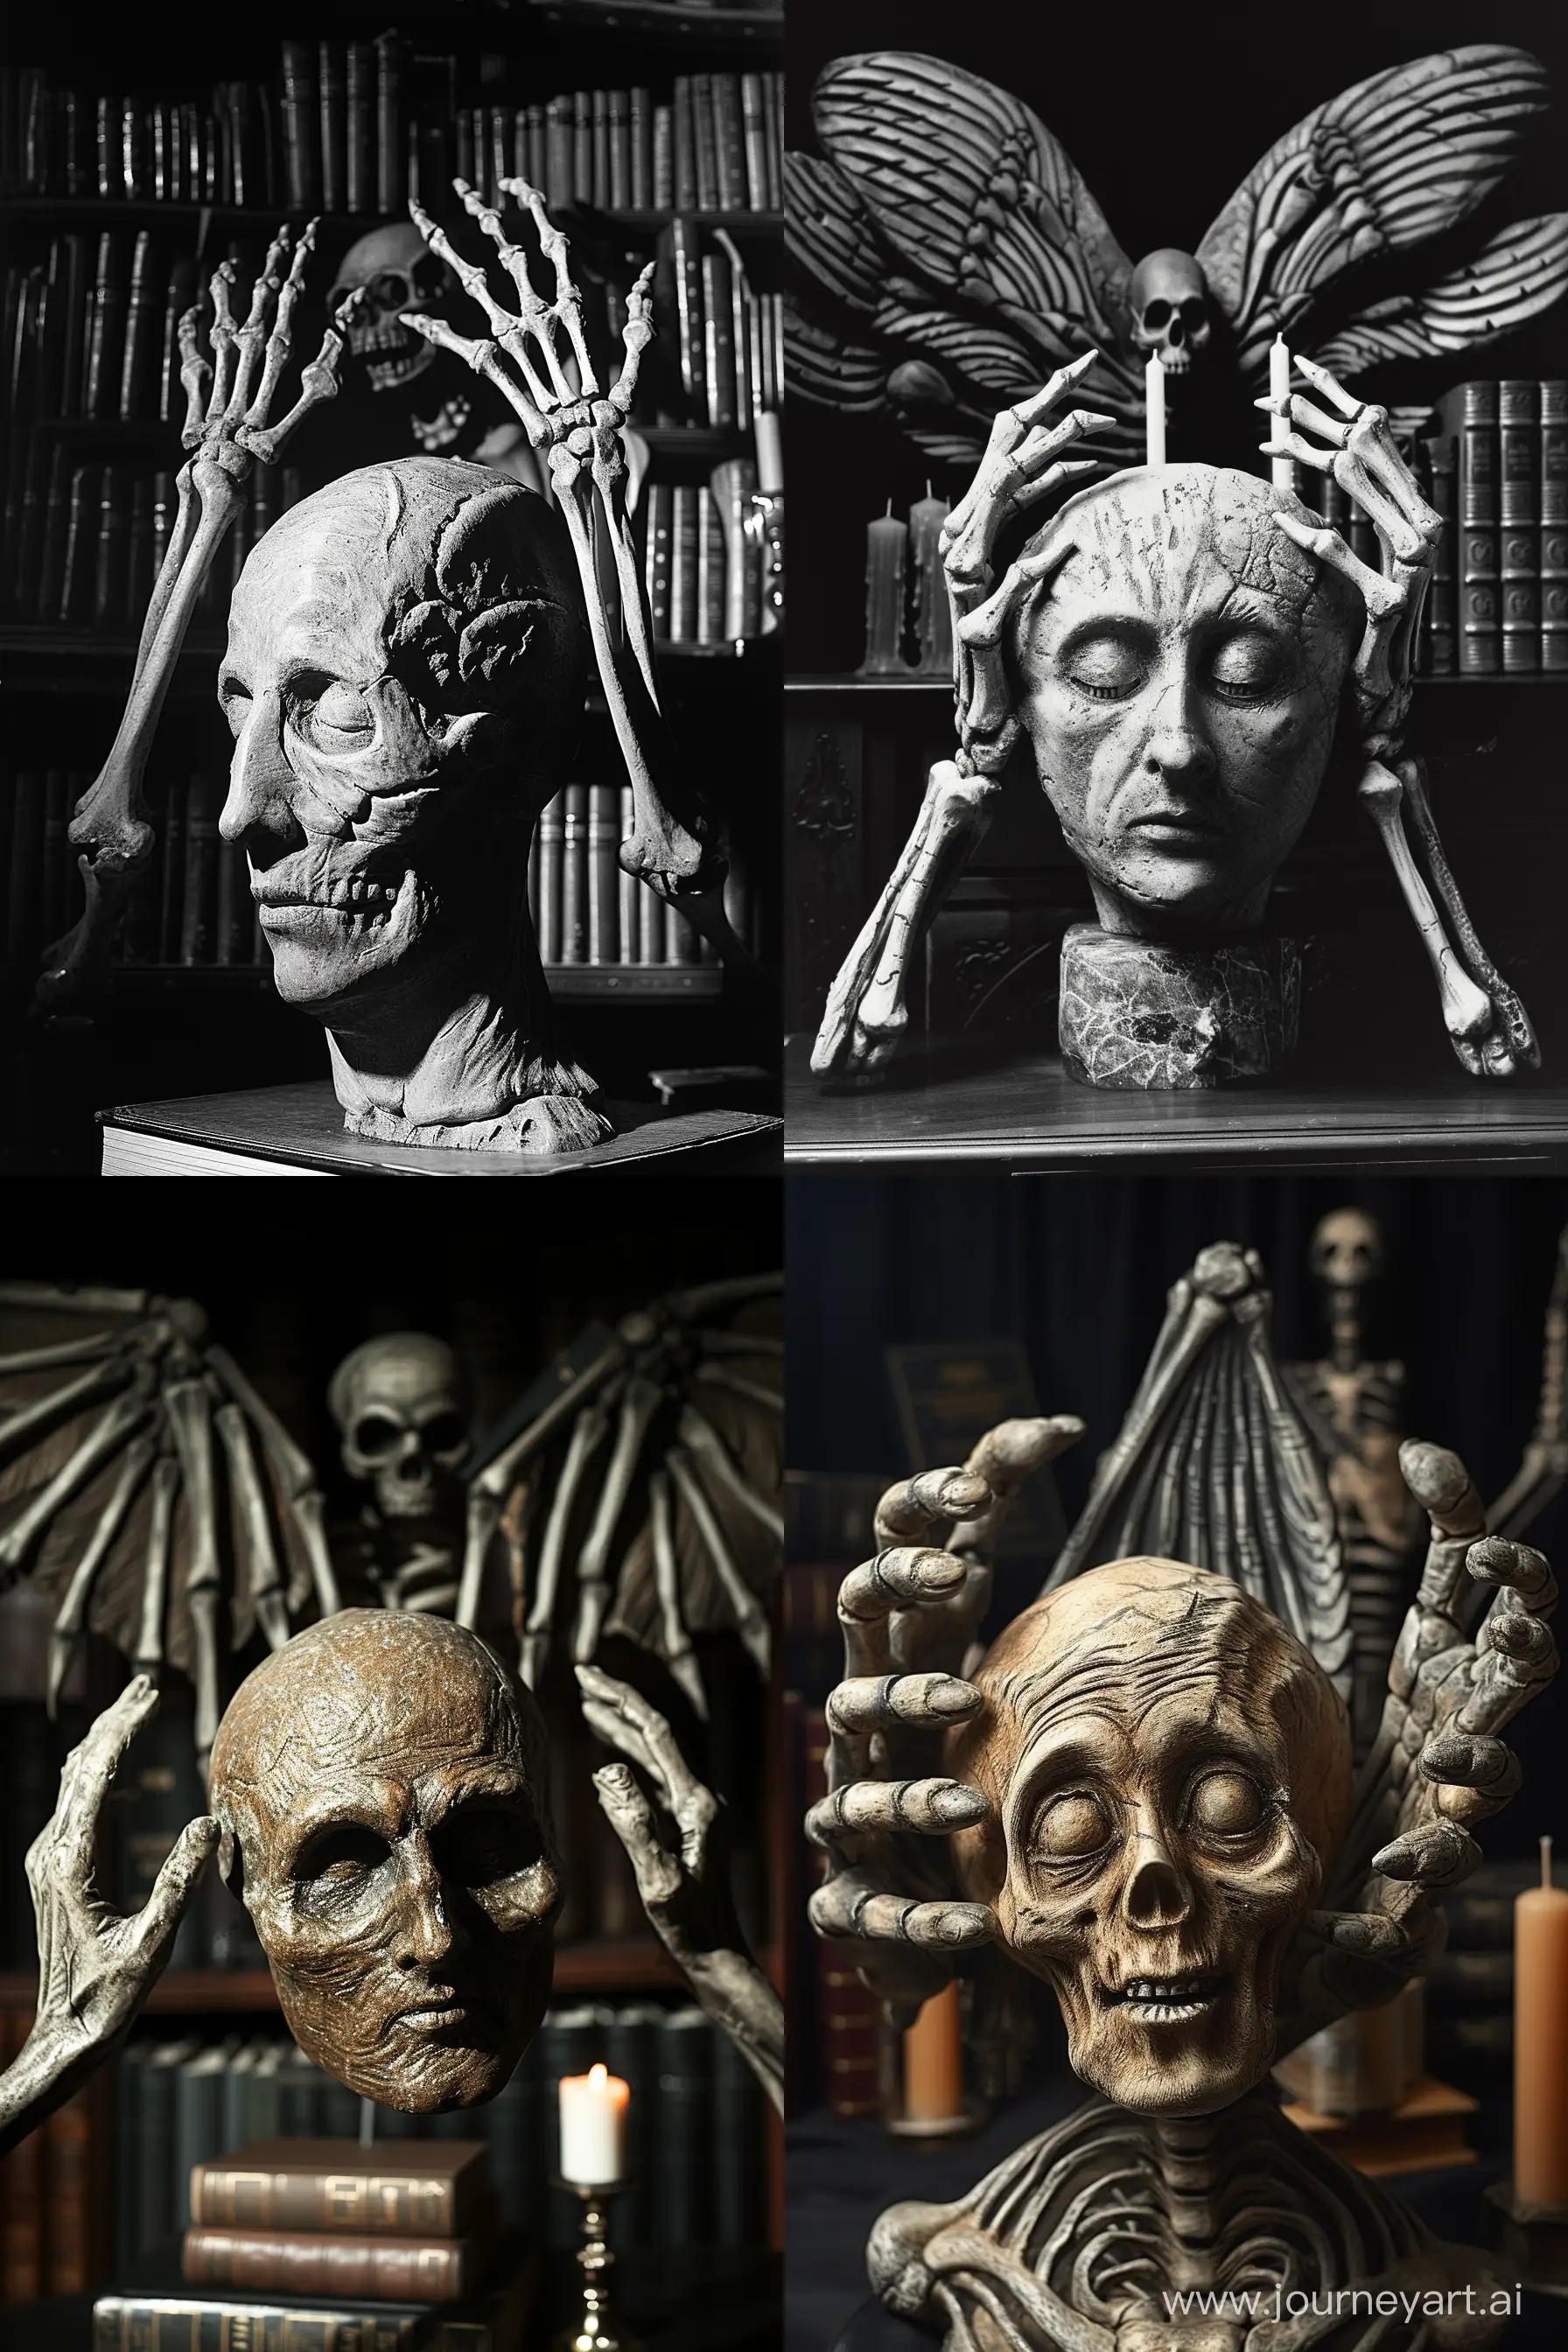 Eerie-Gothic-Surrealism-Spooky-Head-with-Giant-Skeleton-Wings-in-1979s-Dark-Baroque-Setting